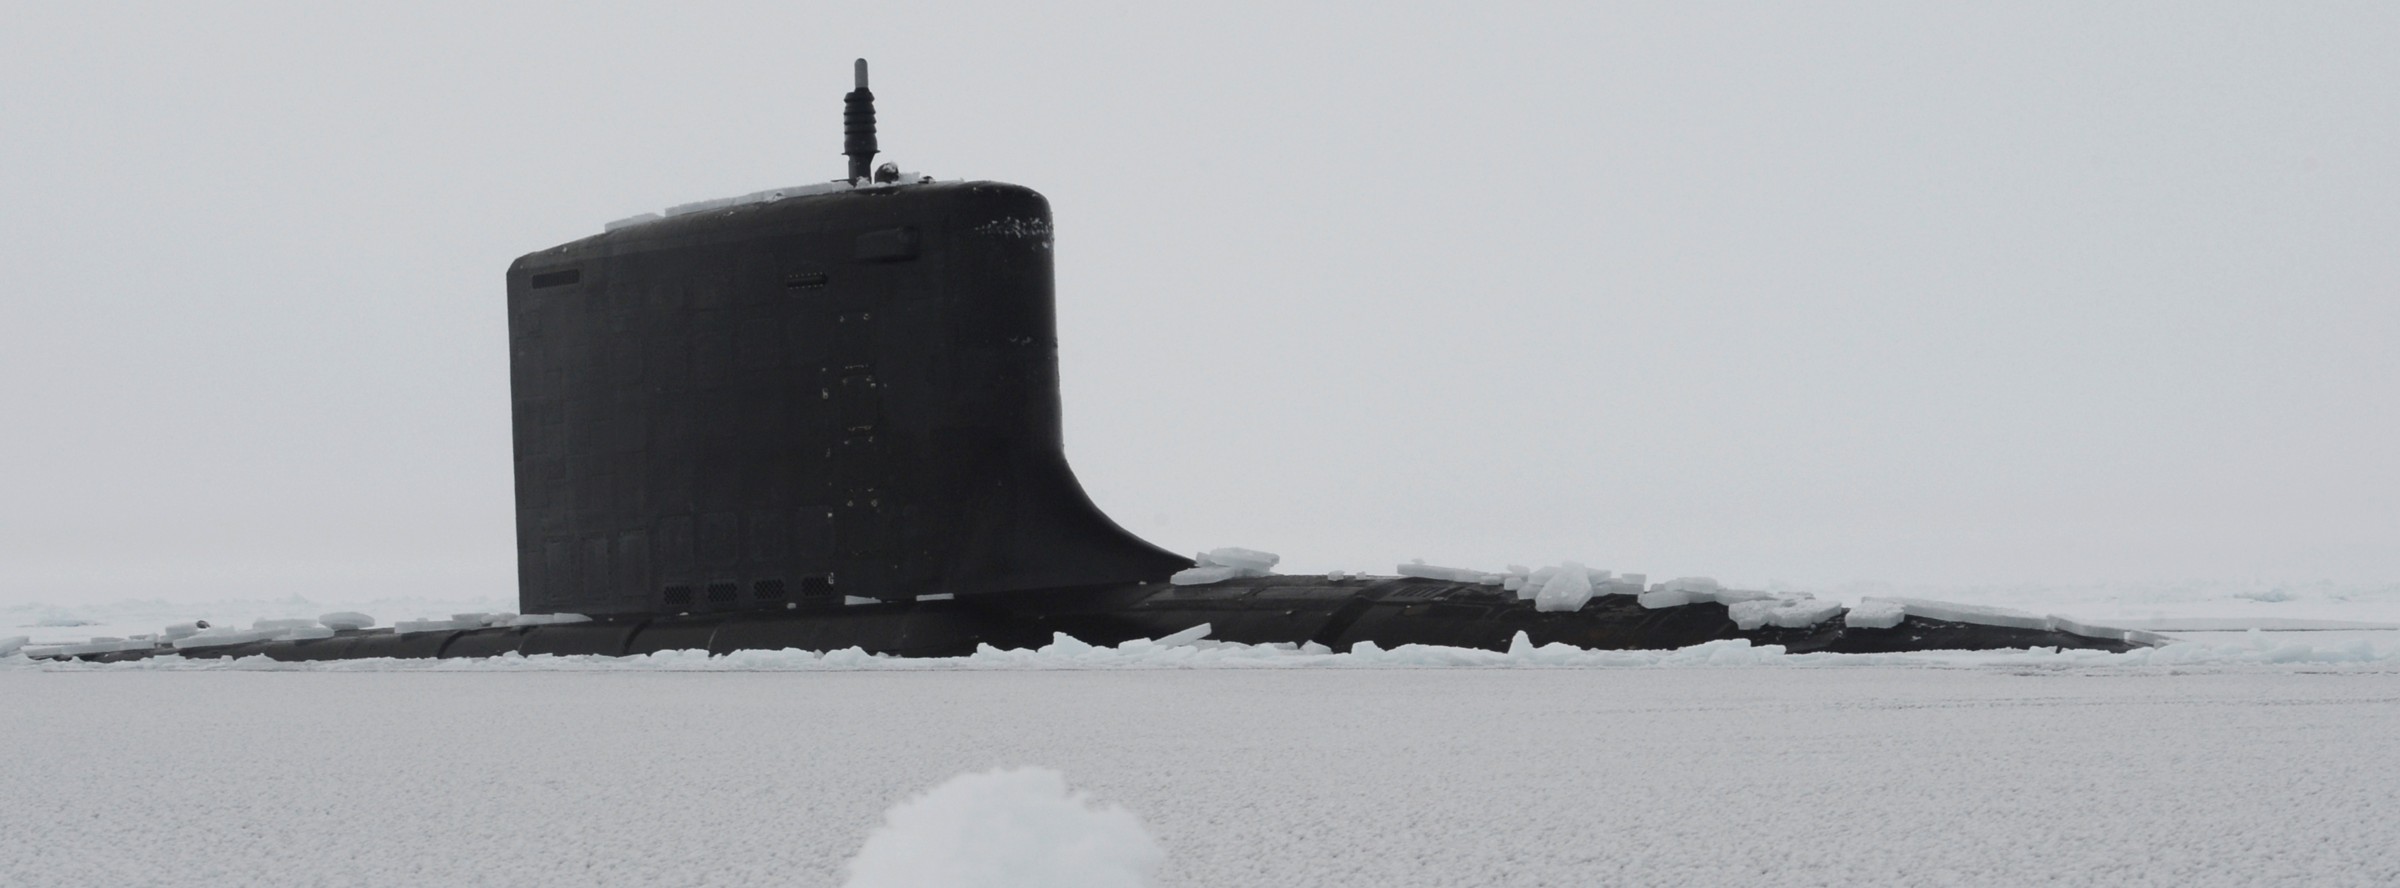 ssn-779 uss new mexico virginia class attack submarine us navy 03 icex arctic ocean